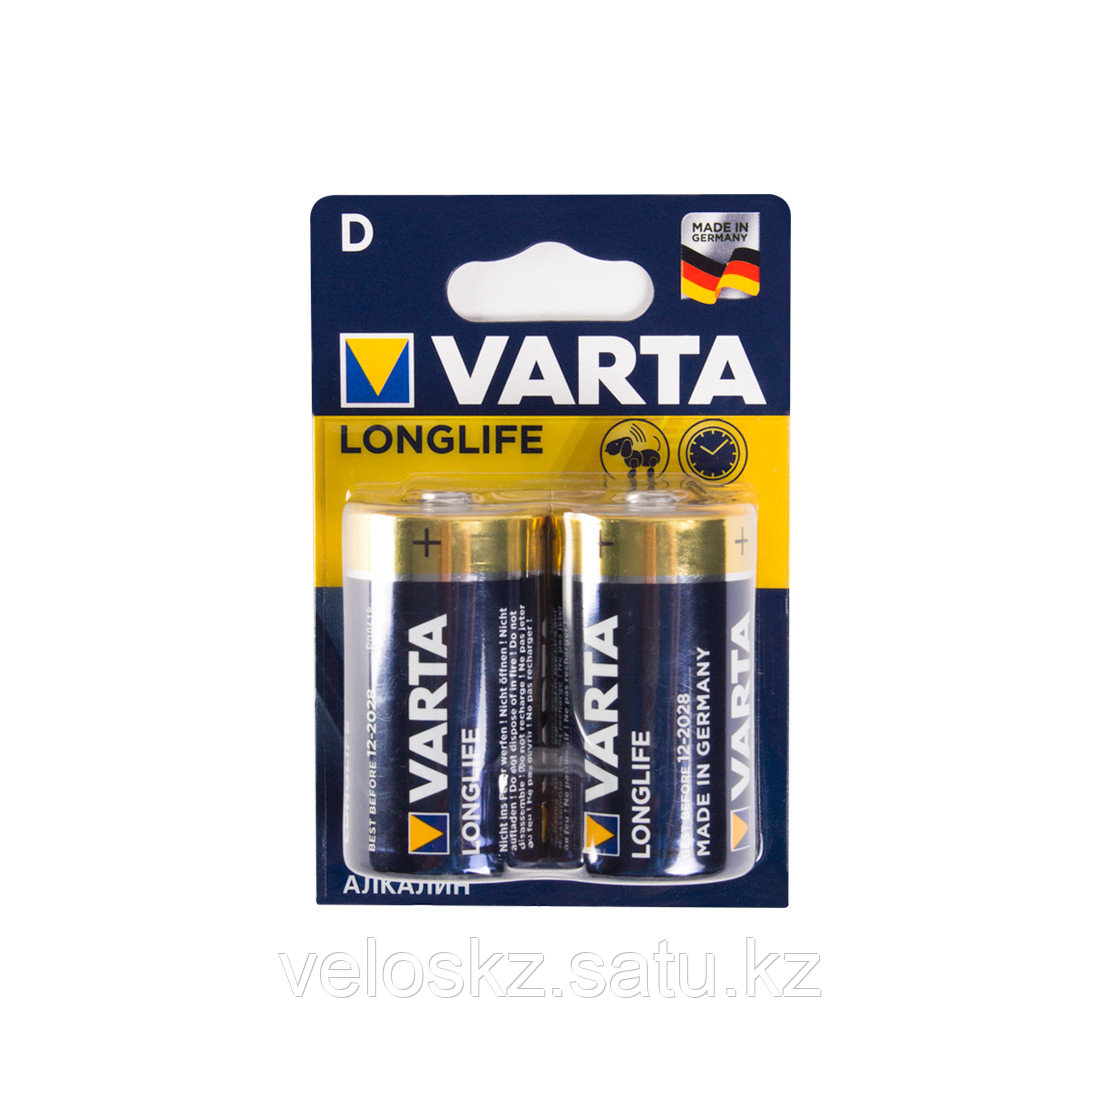 Varta Батарейки VARTA, LR20/ D Longlife Mono 2шт